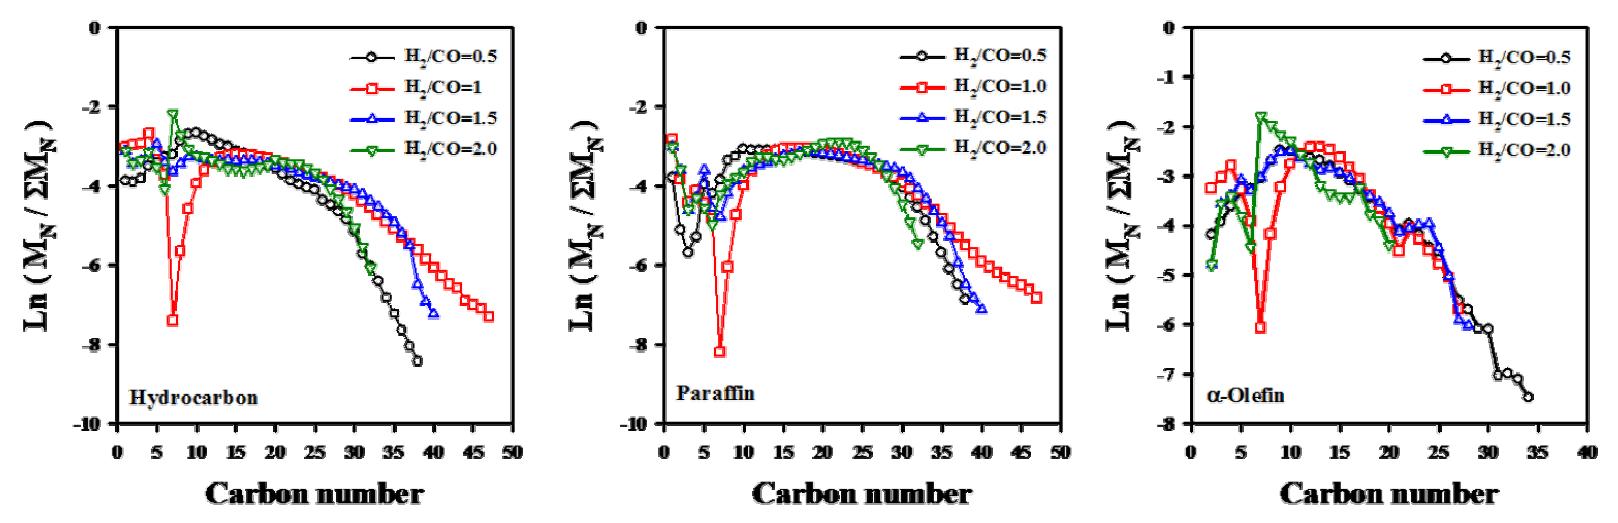 H2/CO 비에 따른 탄화수소, α-올레핀, 파라핀의 분포변화.